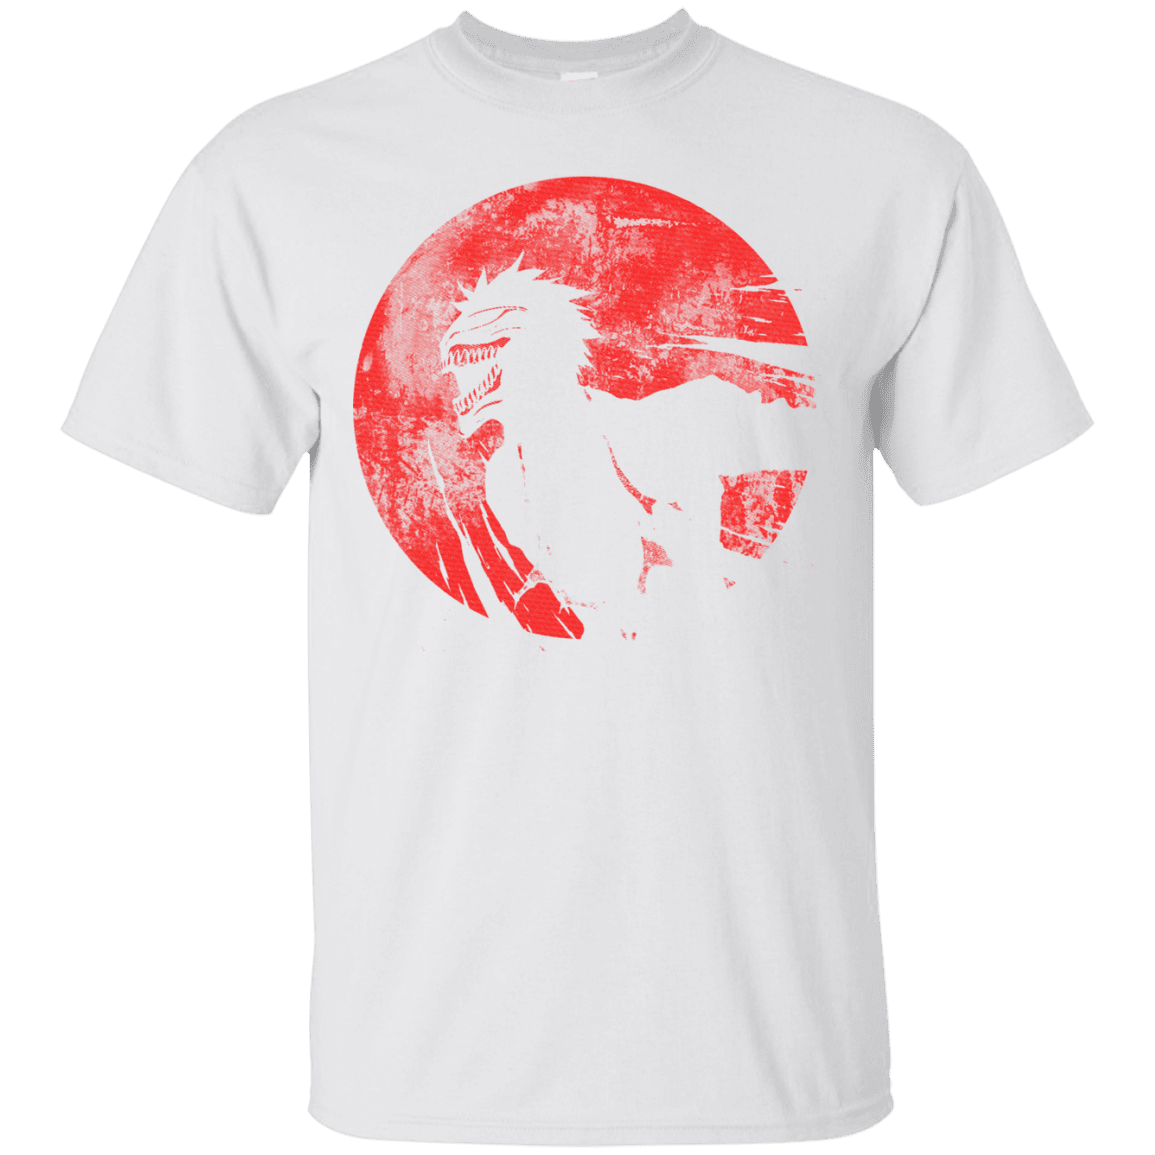 T-Shirts White / S Shinigami Mask T-Shirt